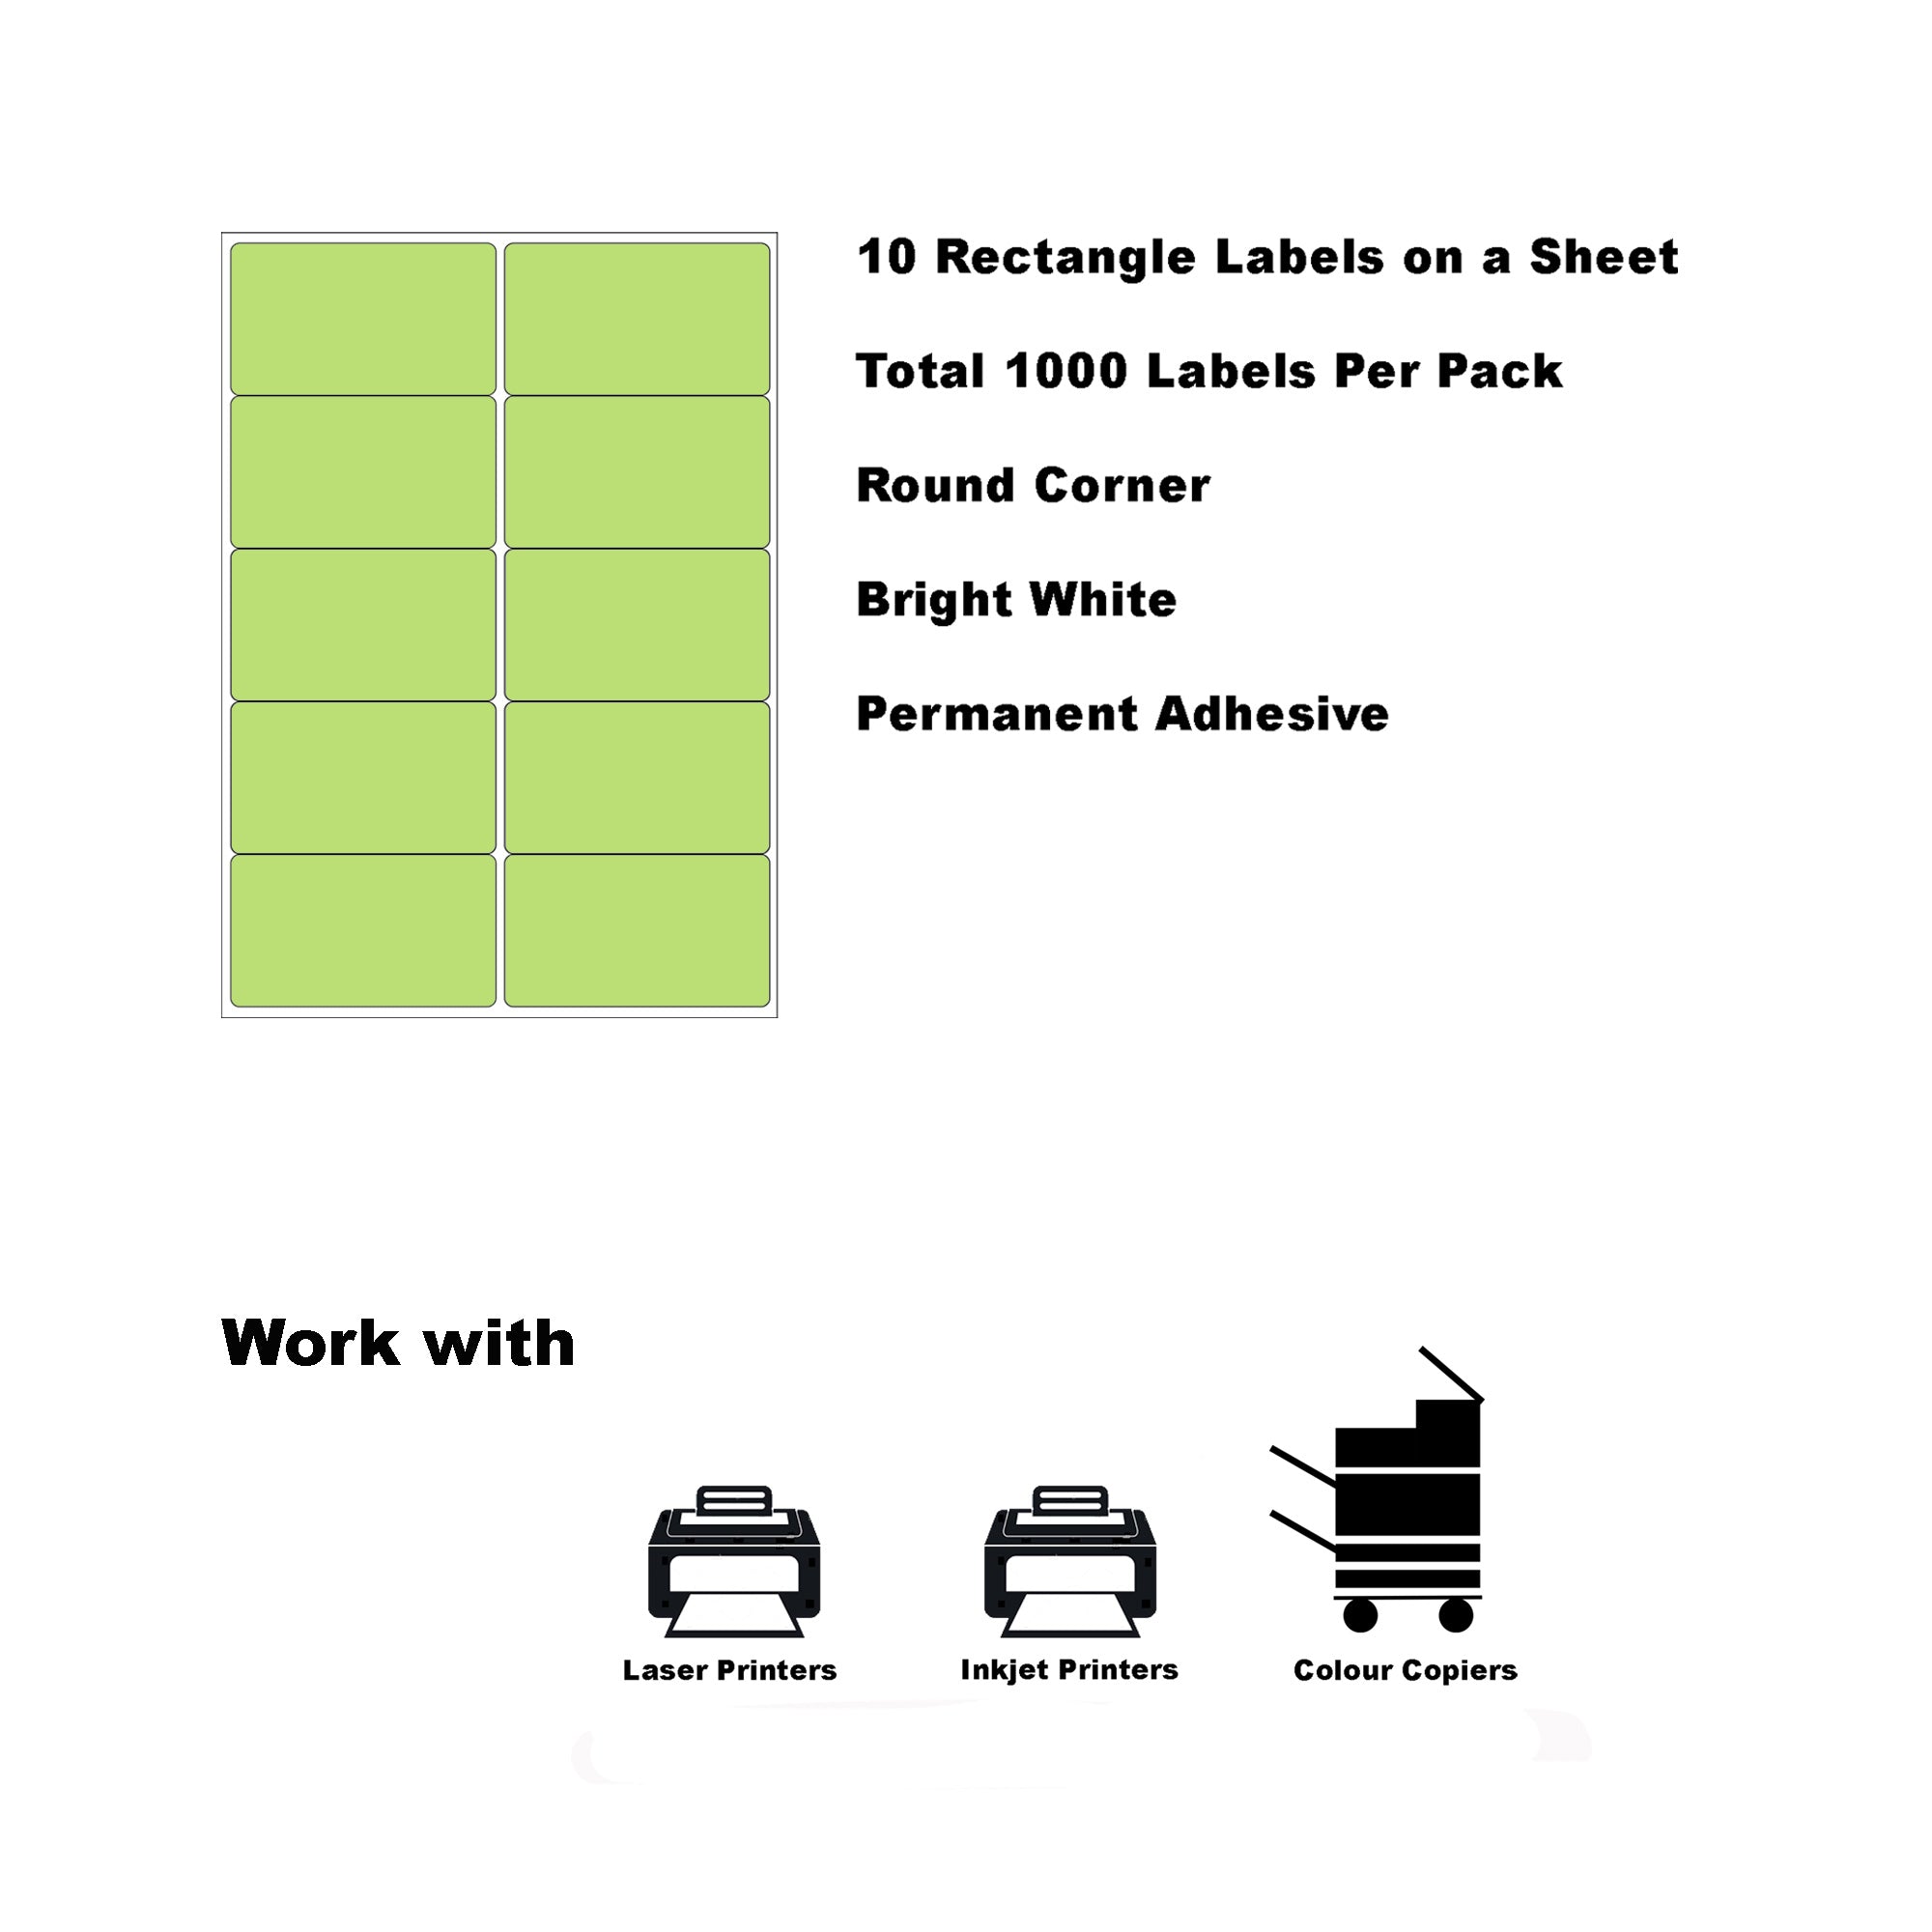 A4 Format Rectangle Light Green 99.1 x 57mm Labels 10 Labels Per Sheet-100 Sheets